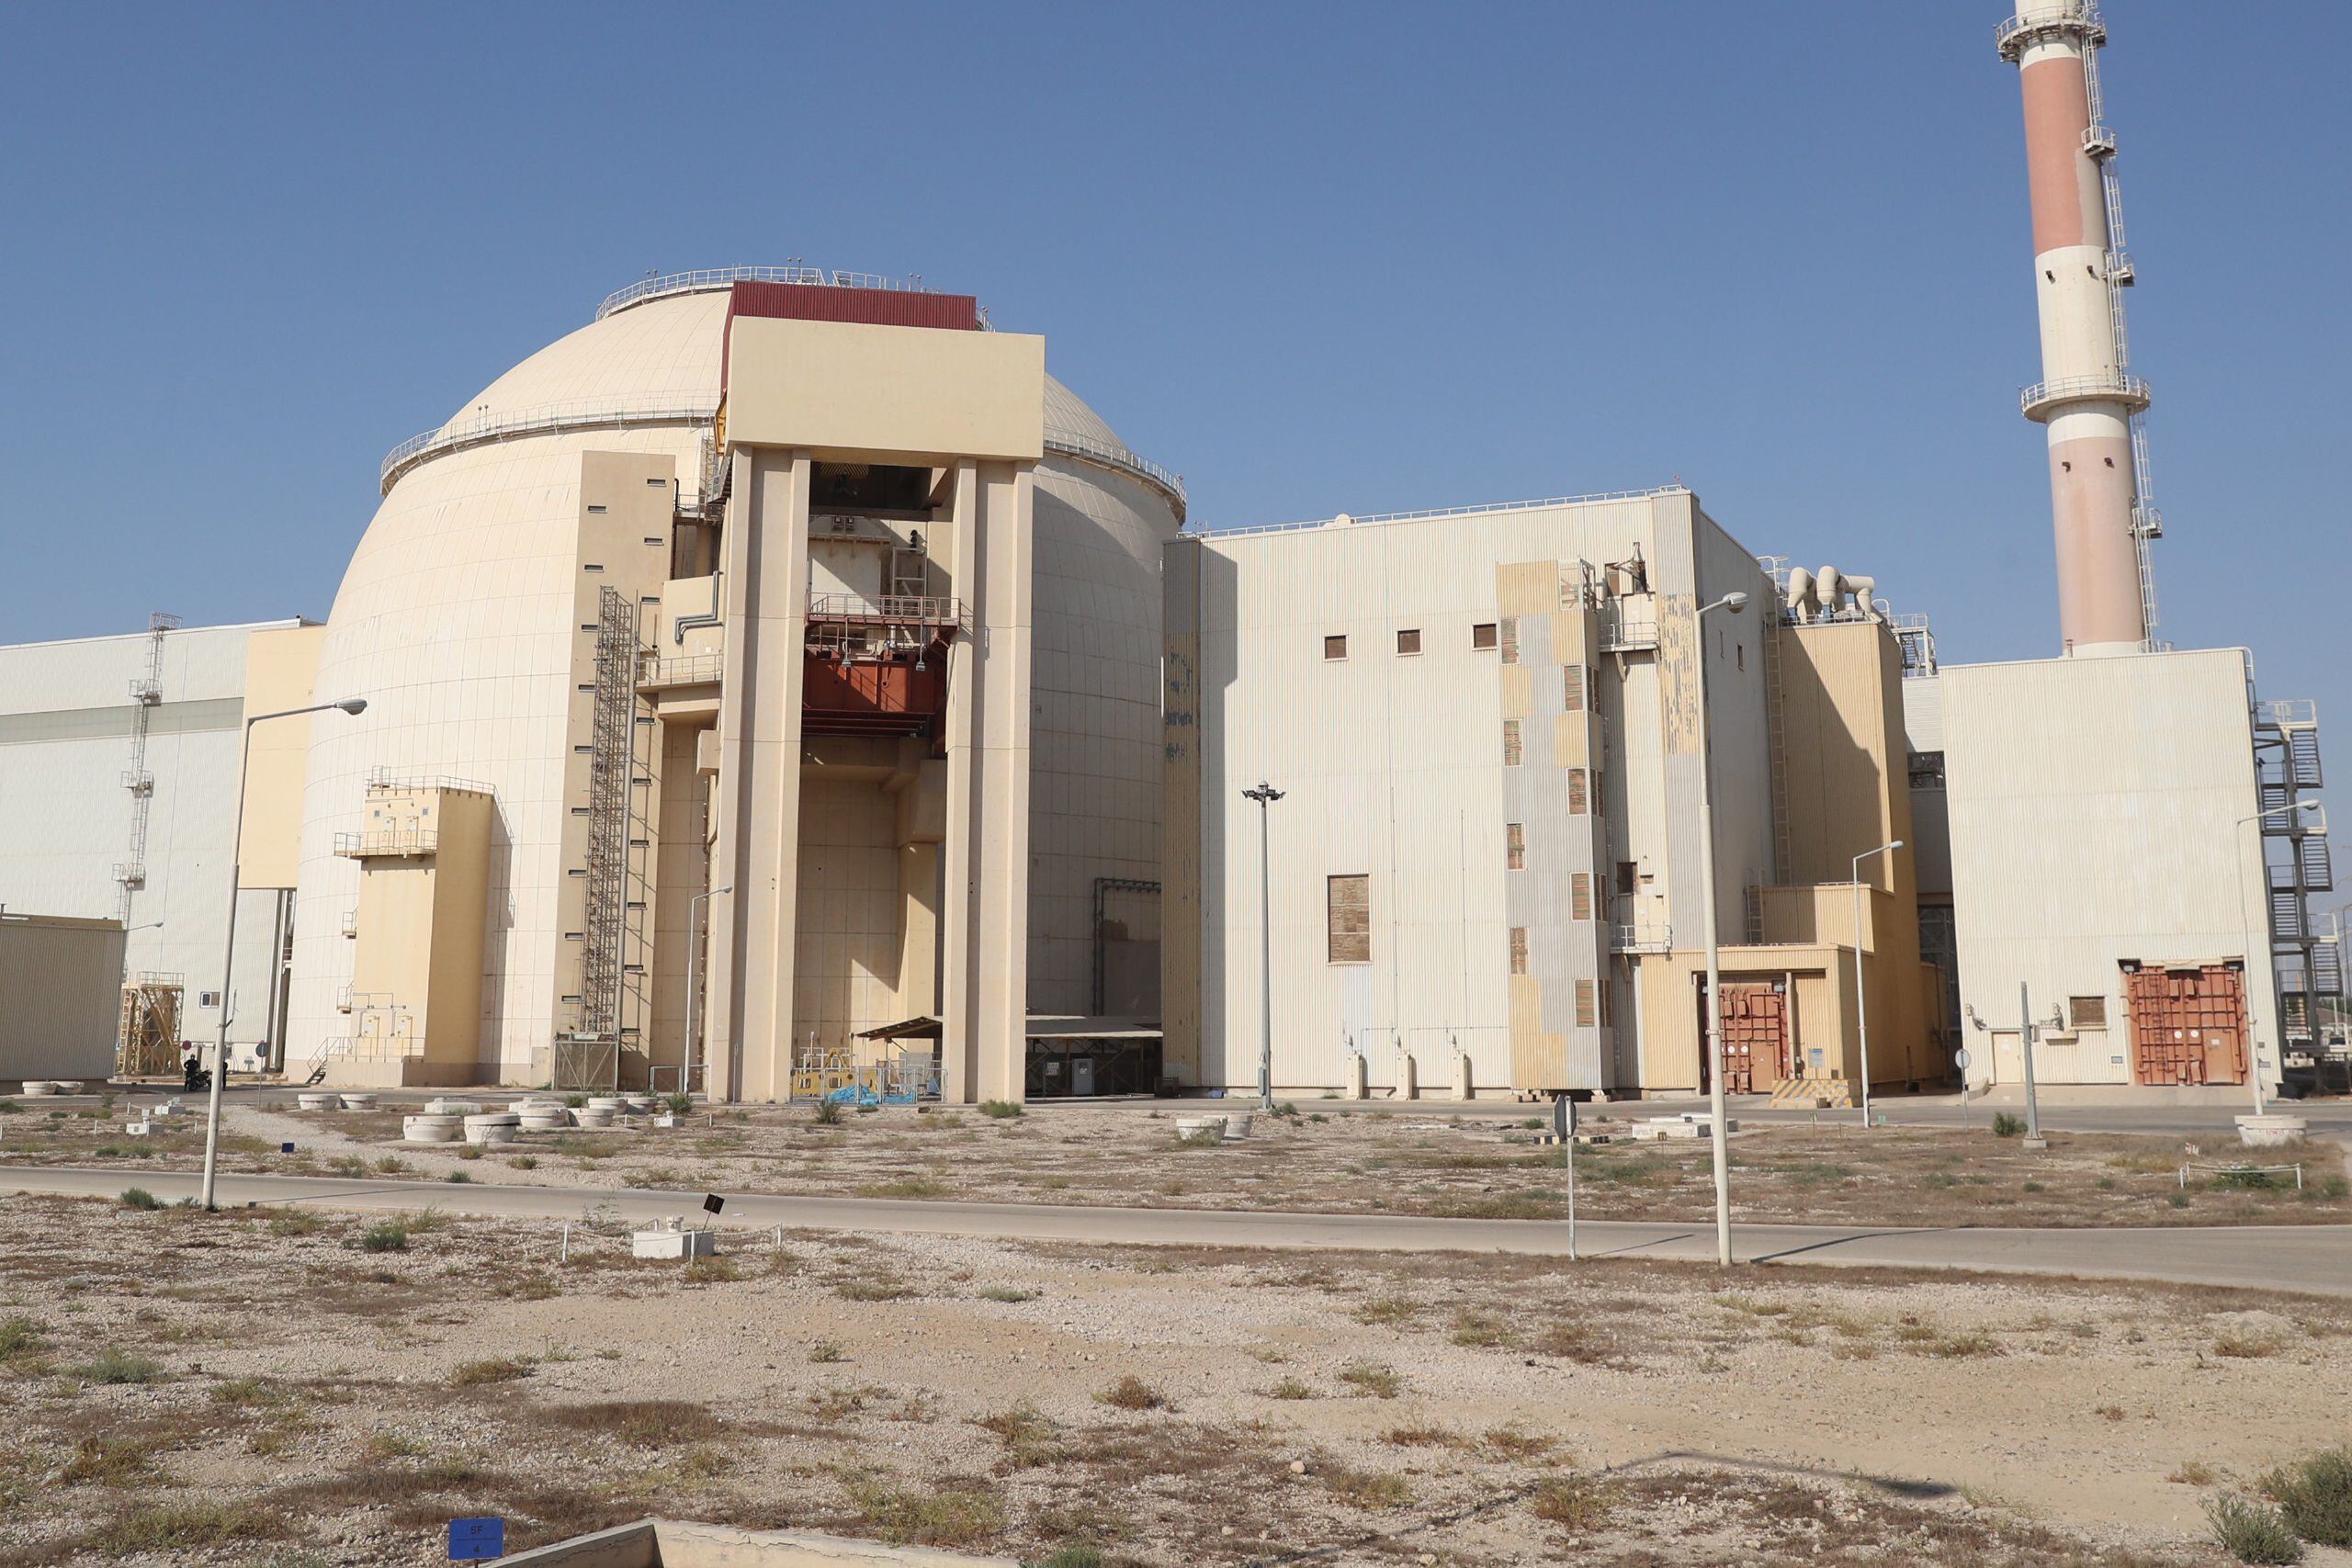 La central nuclear de Bushehr, en Irán. IRANIAN PRESIDENCY / ZUMA PRESS / CONTACTOPHOTO